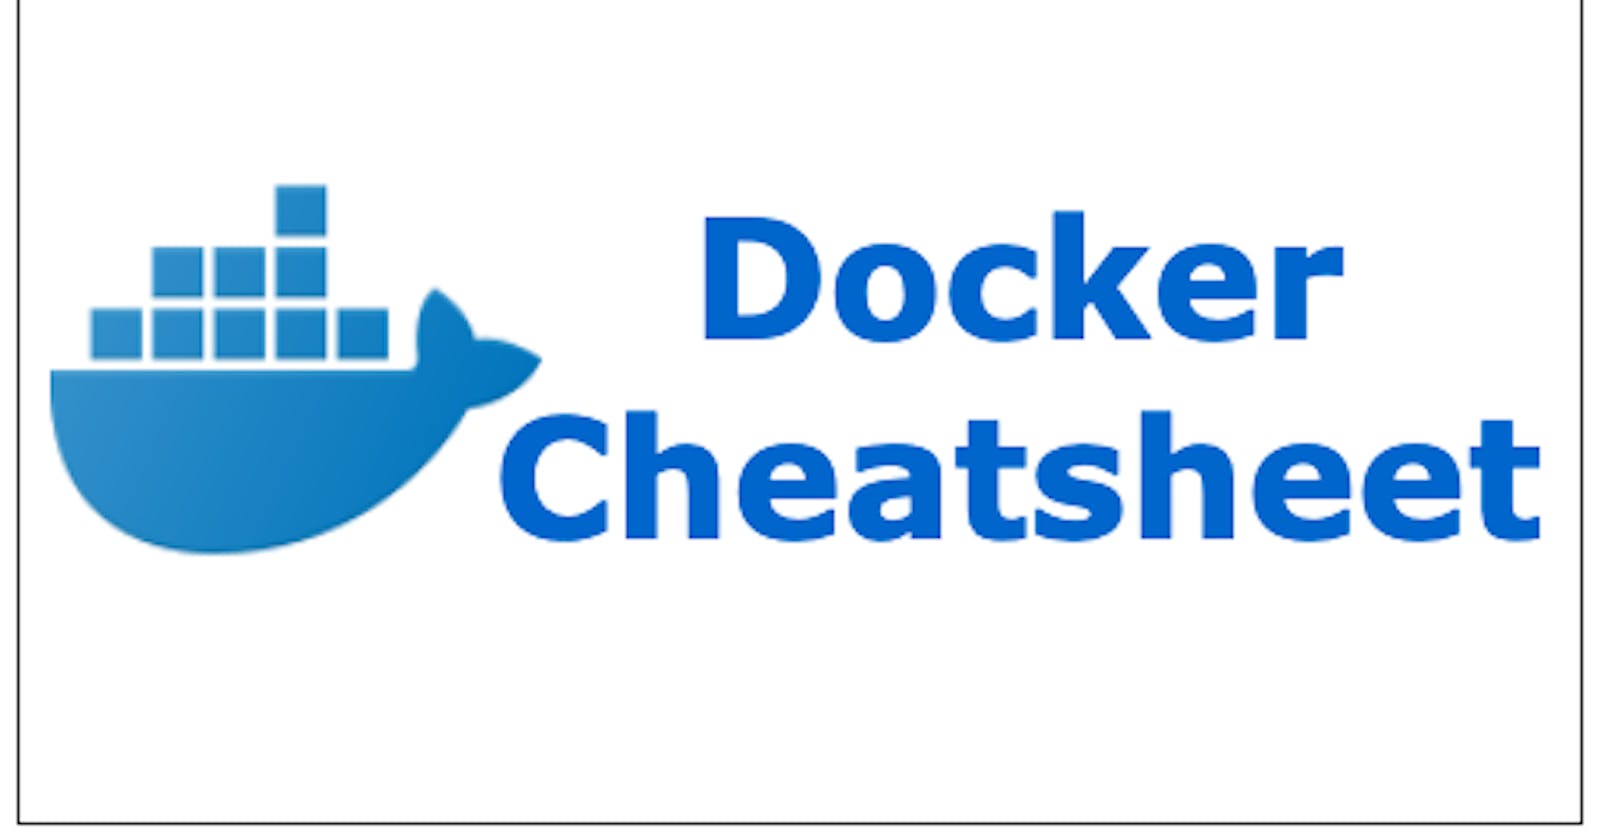 Docker Cheatsheet